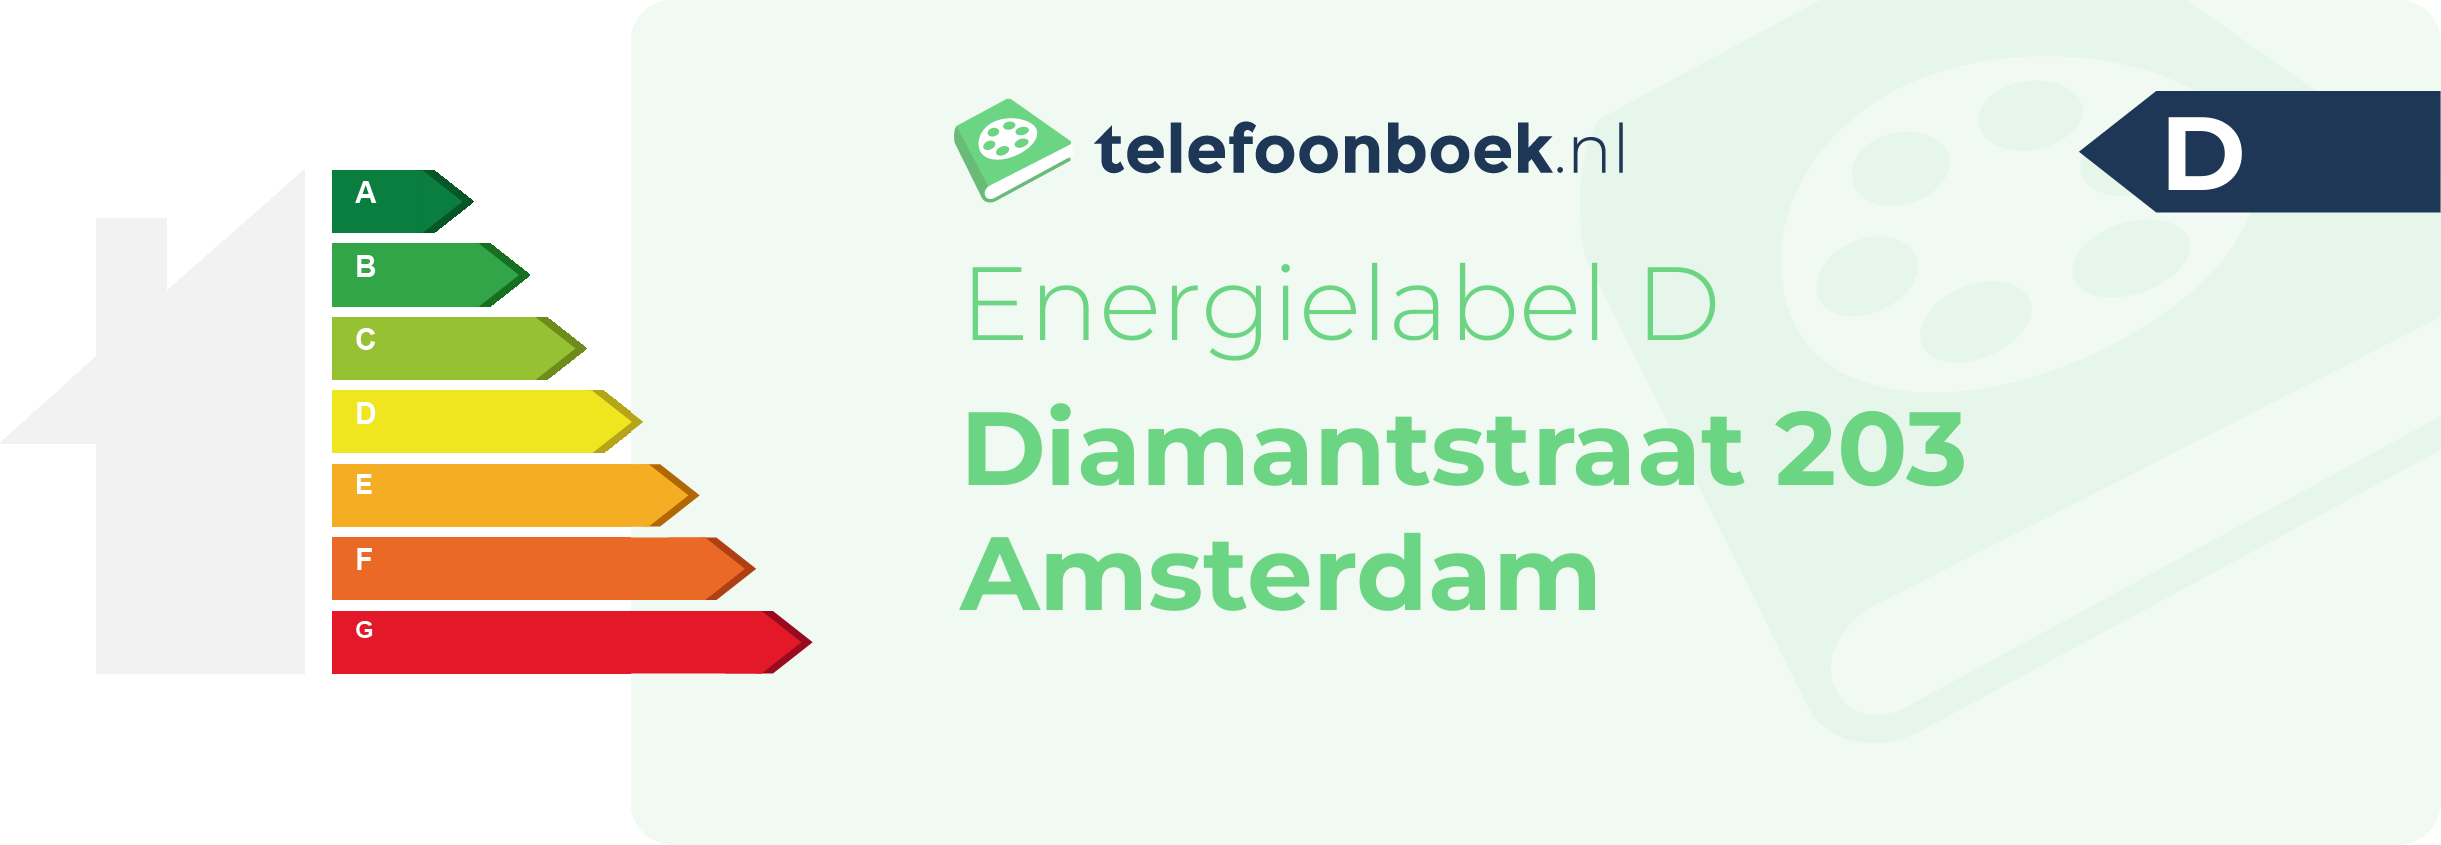 Energielabel Diamantstraat 203 Amsterdam